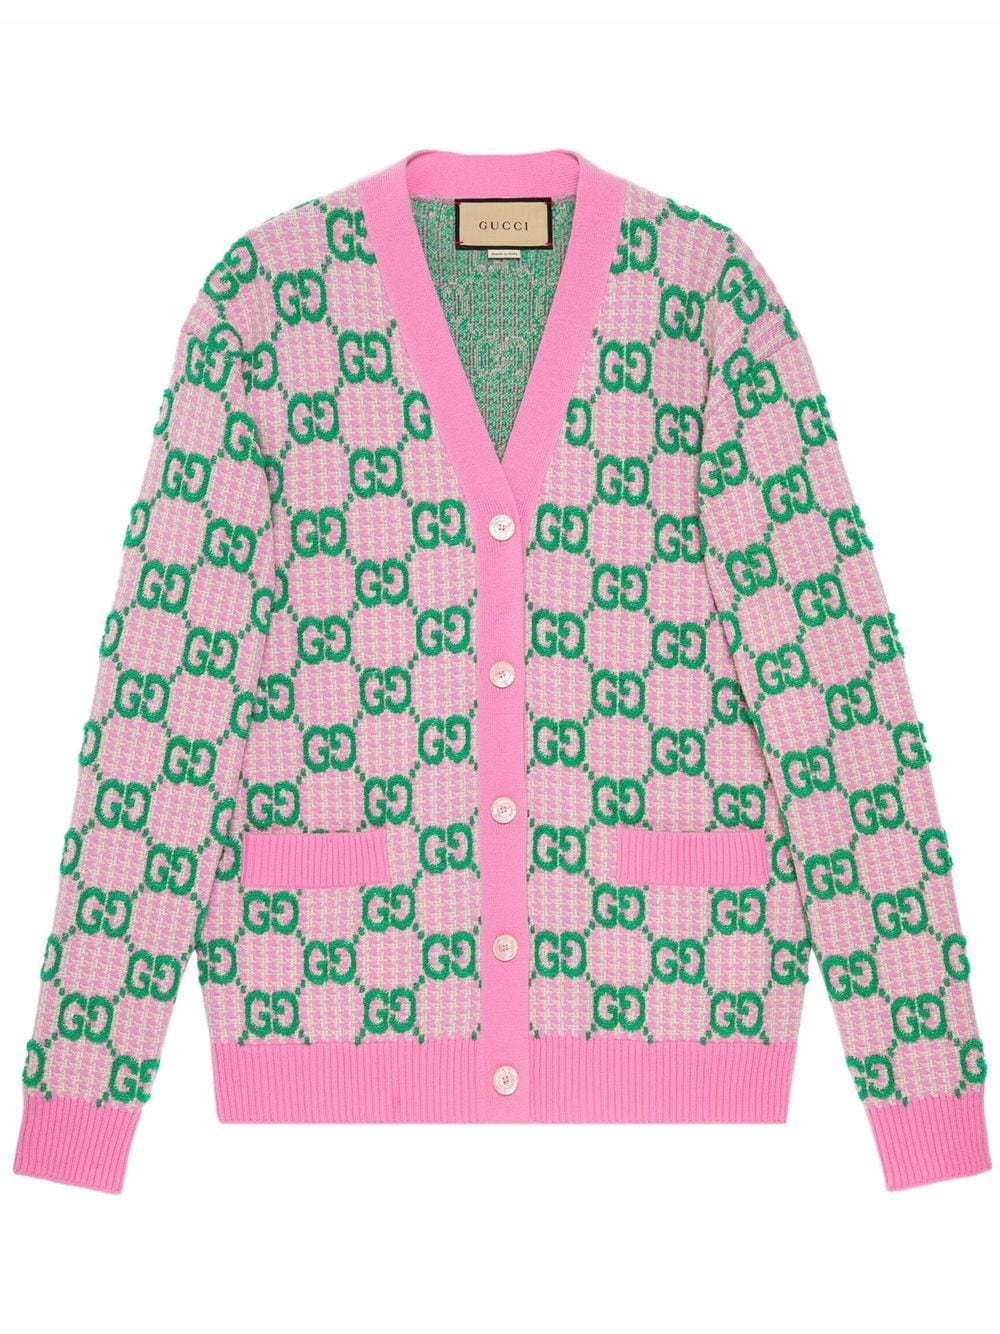 Kyle Richards' Pink and Green Logo Cardigan